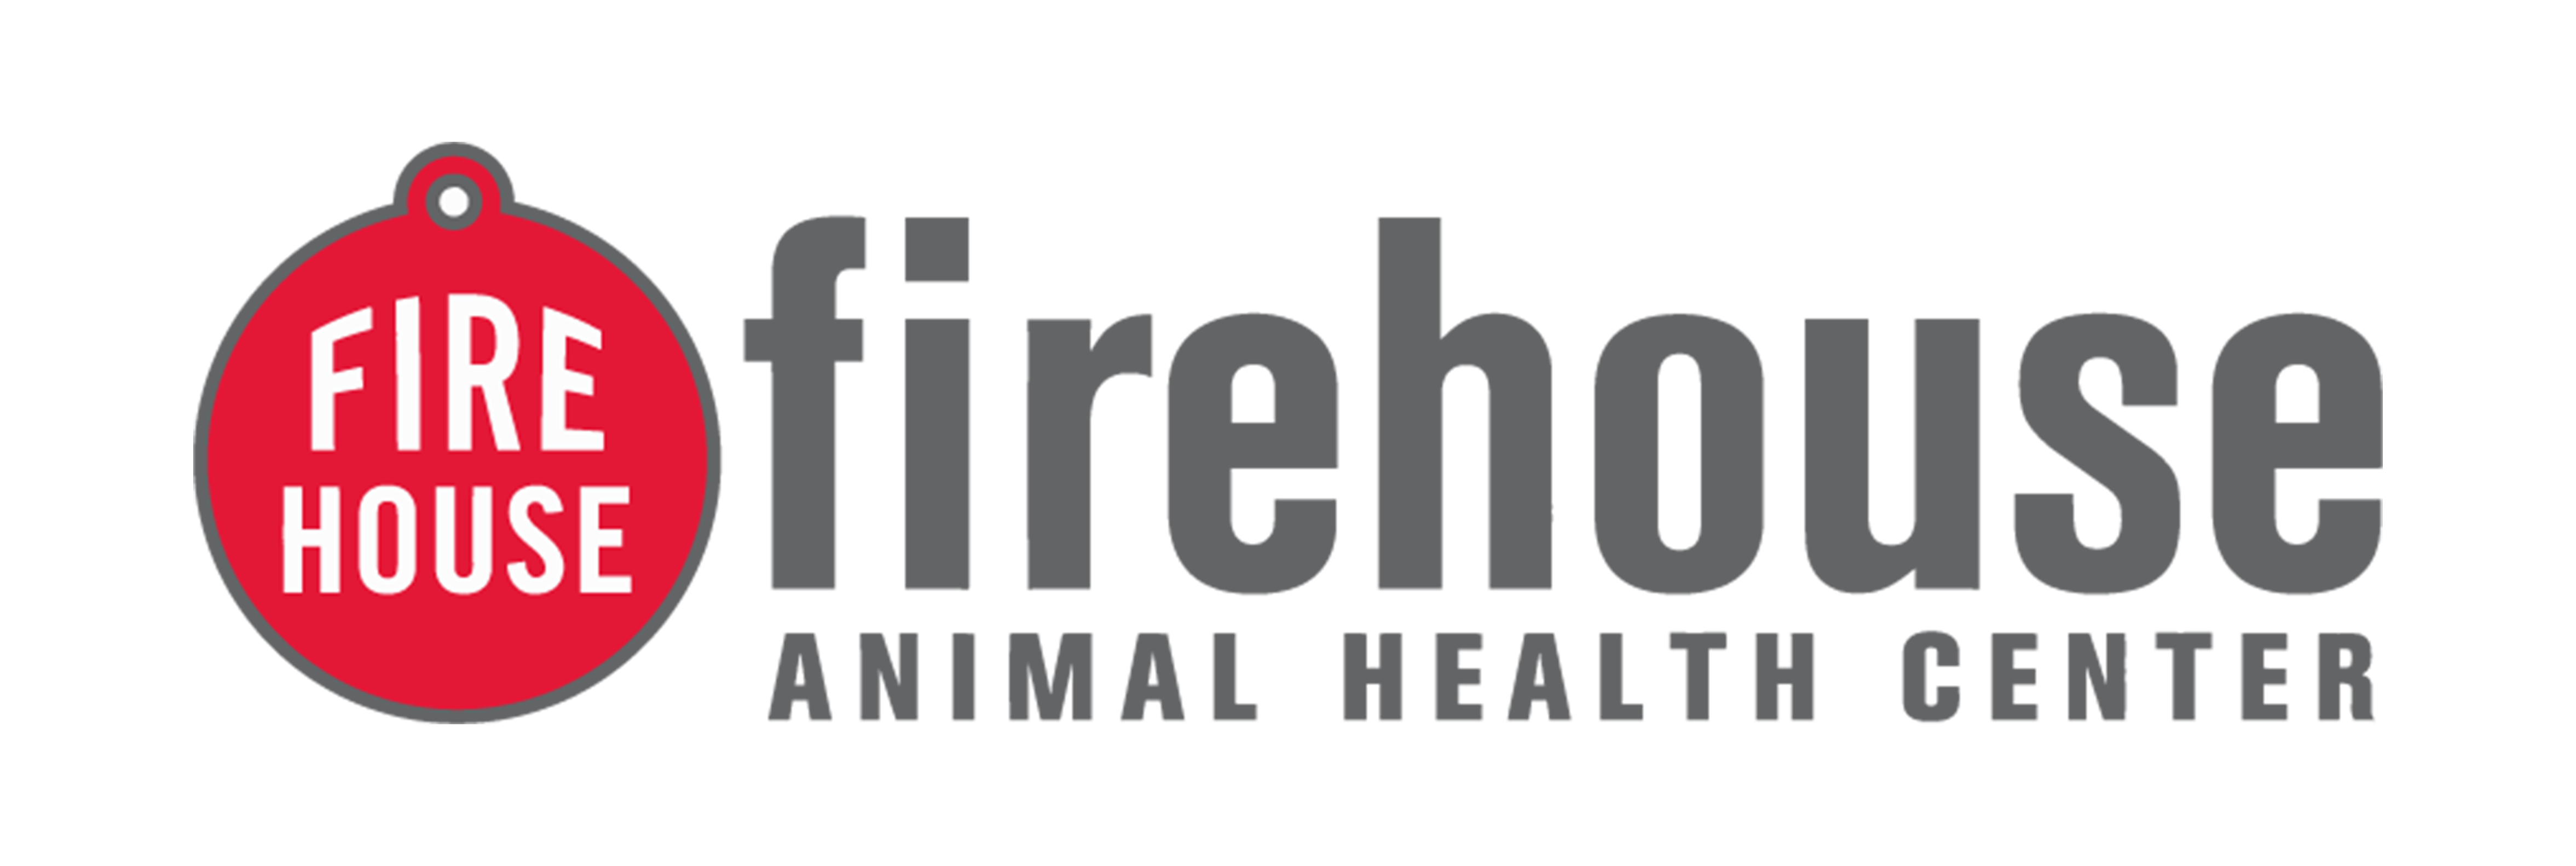 Firehouse Animal Health Round Rock